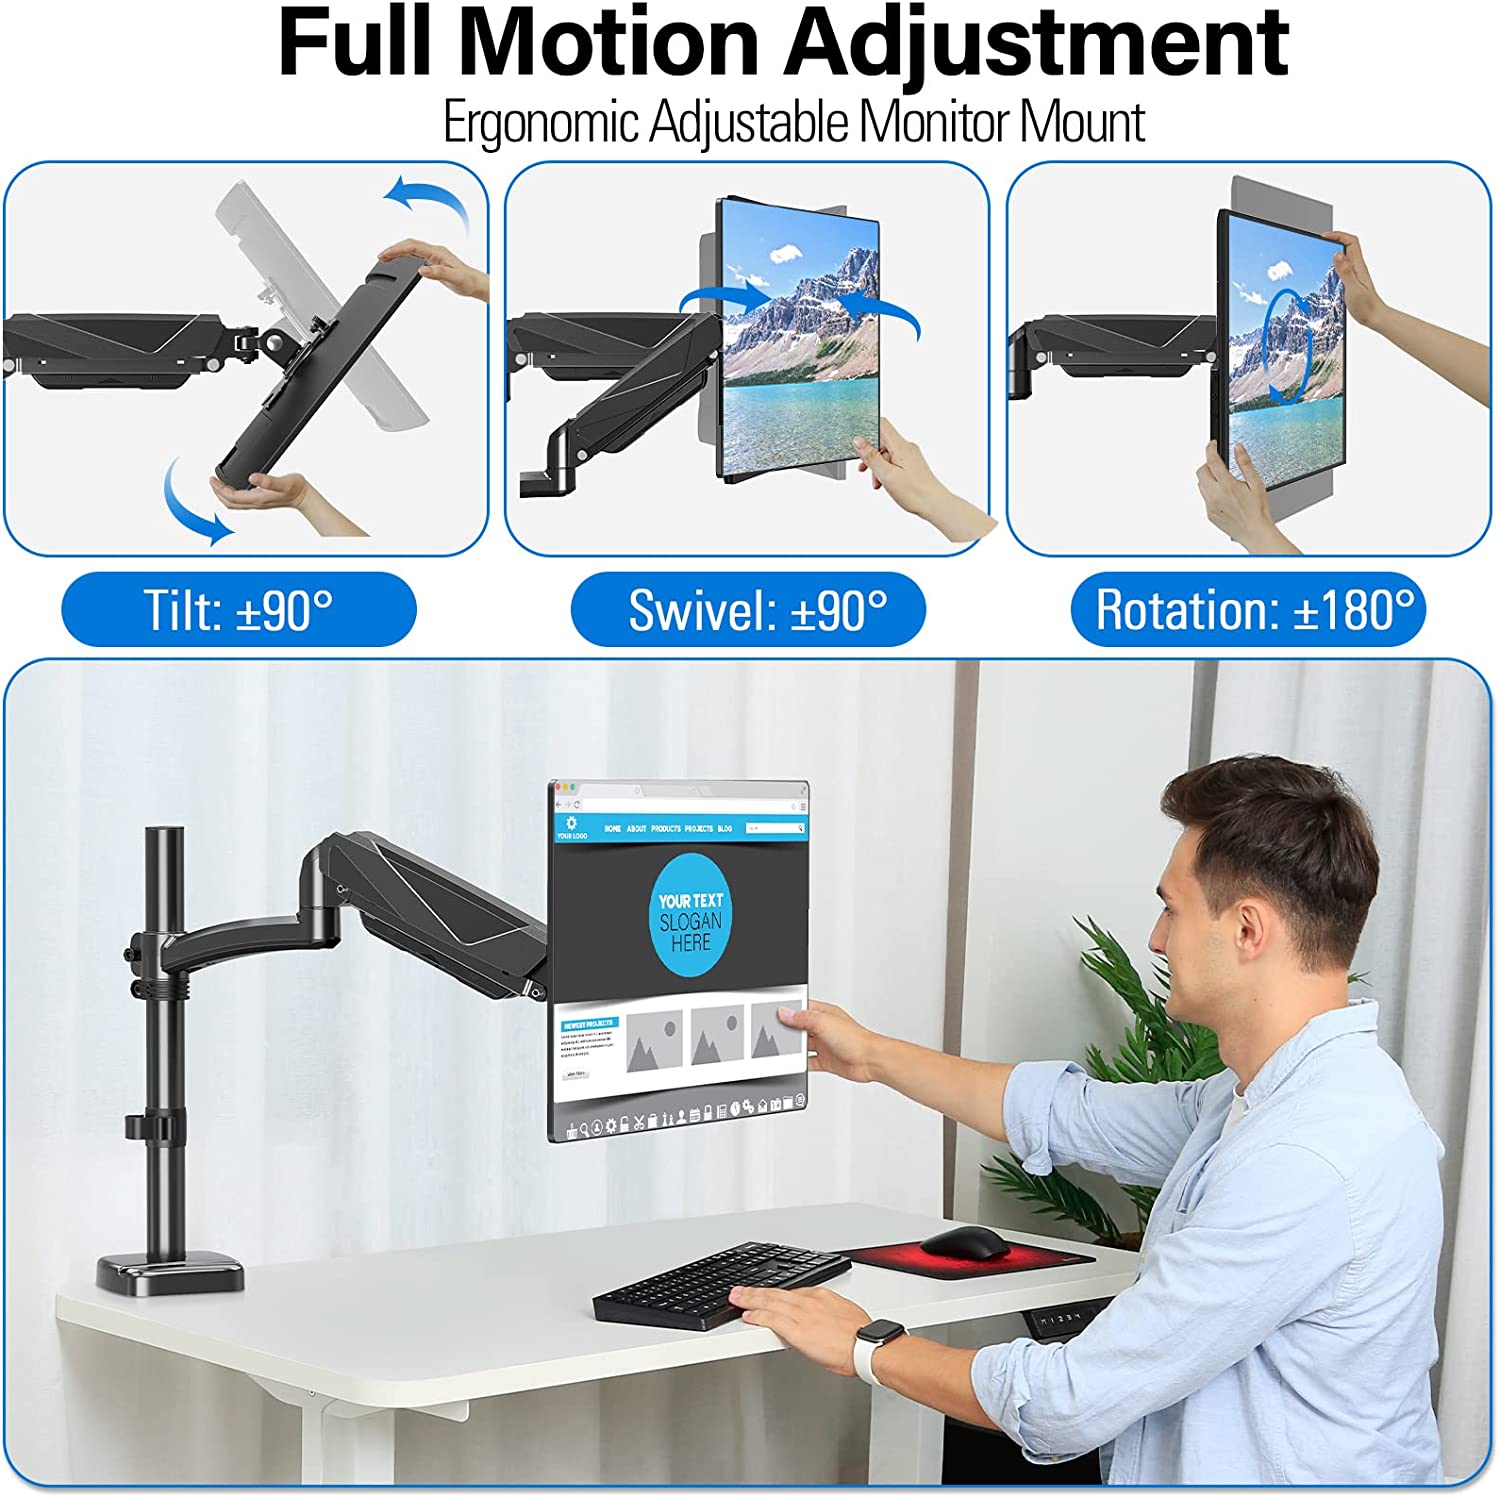 fully adjustable single monitor mount